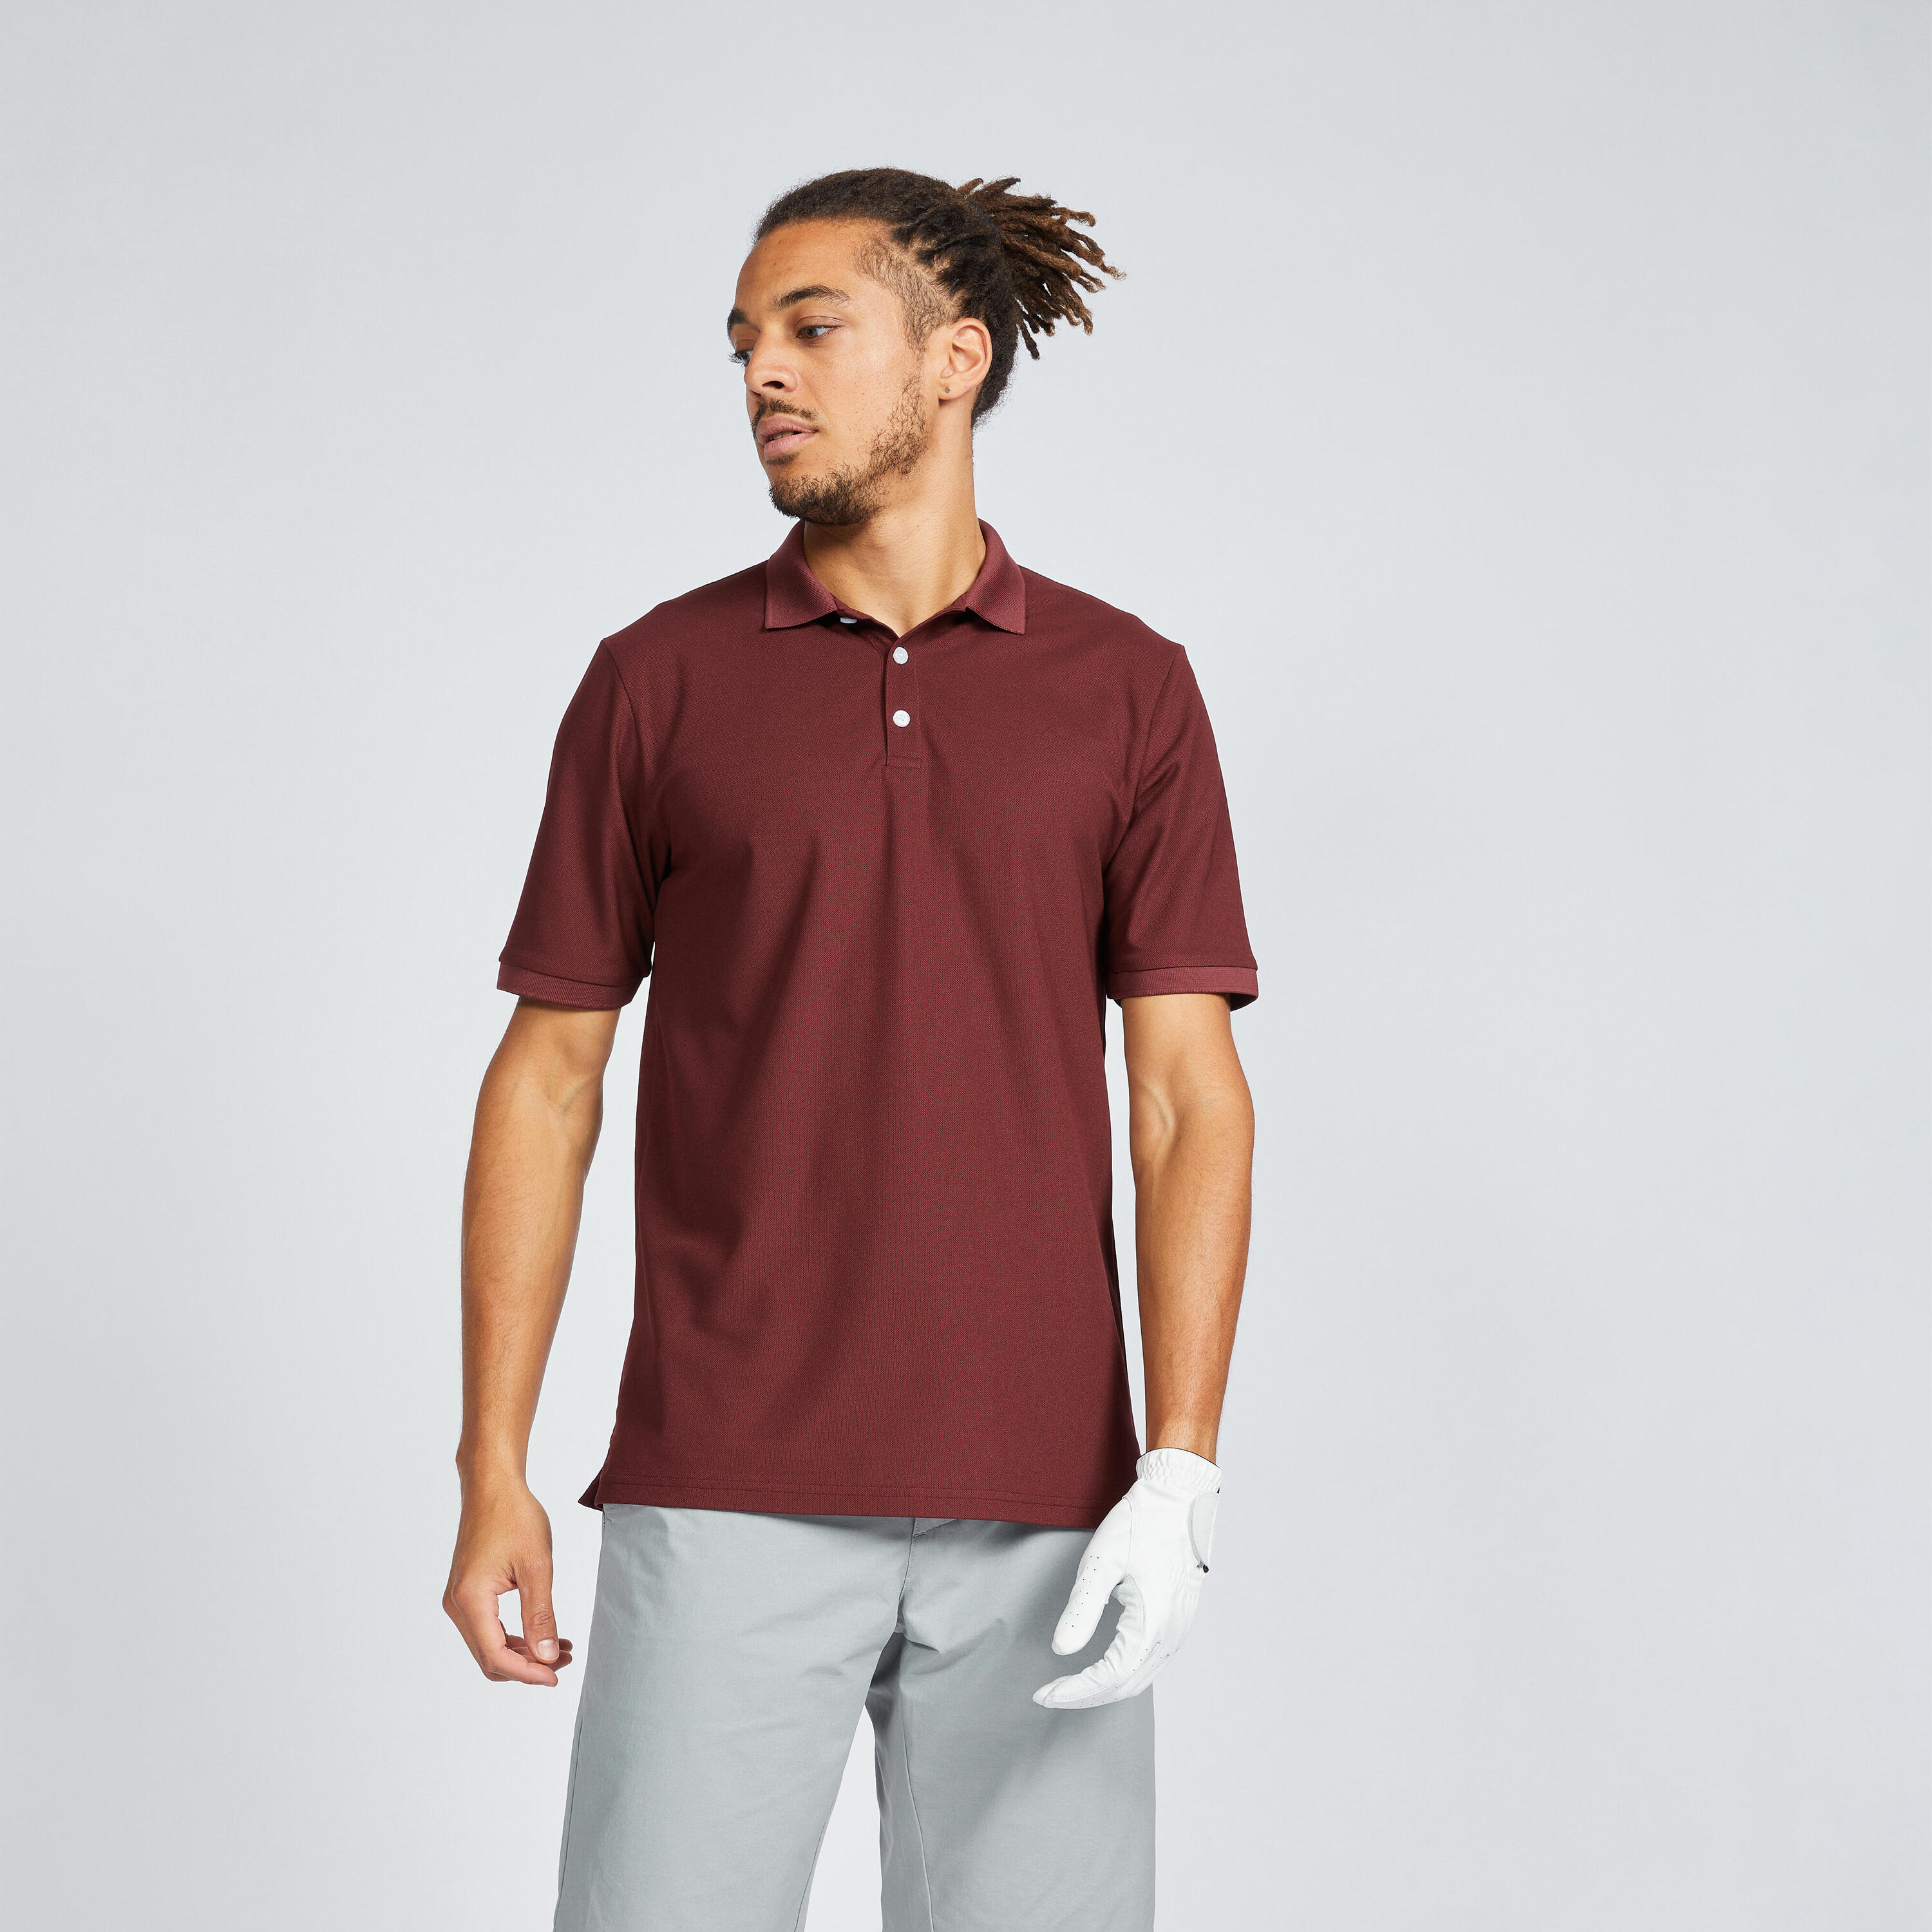 Men's short-sleeved golf polo shirt - WW500 burgundy 1/6